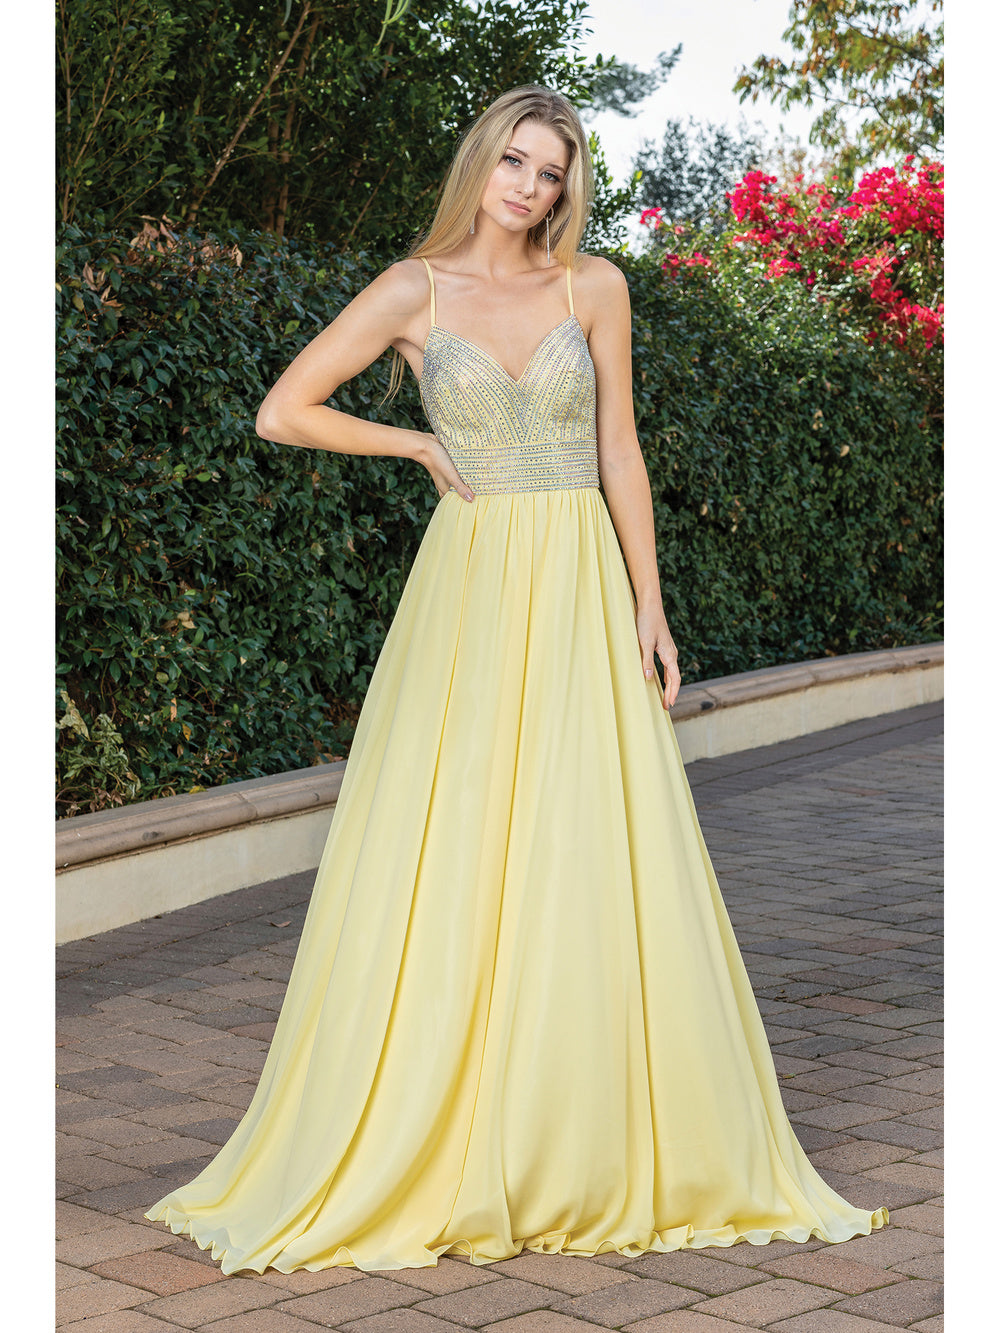 Elegant Flowy Corset Dress in Pastel Yellow